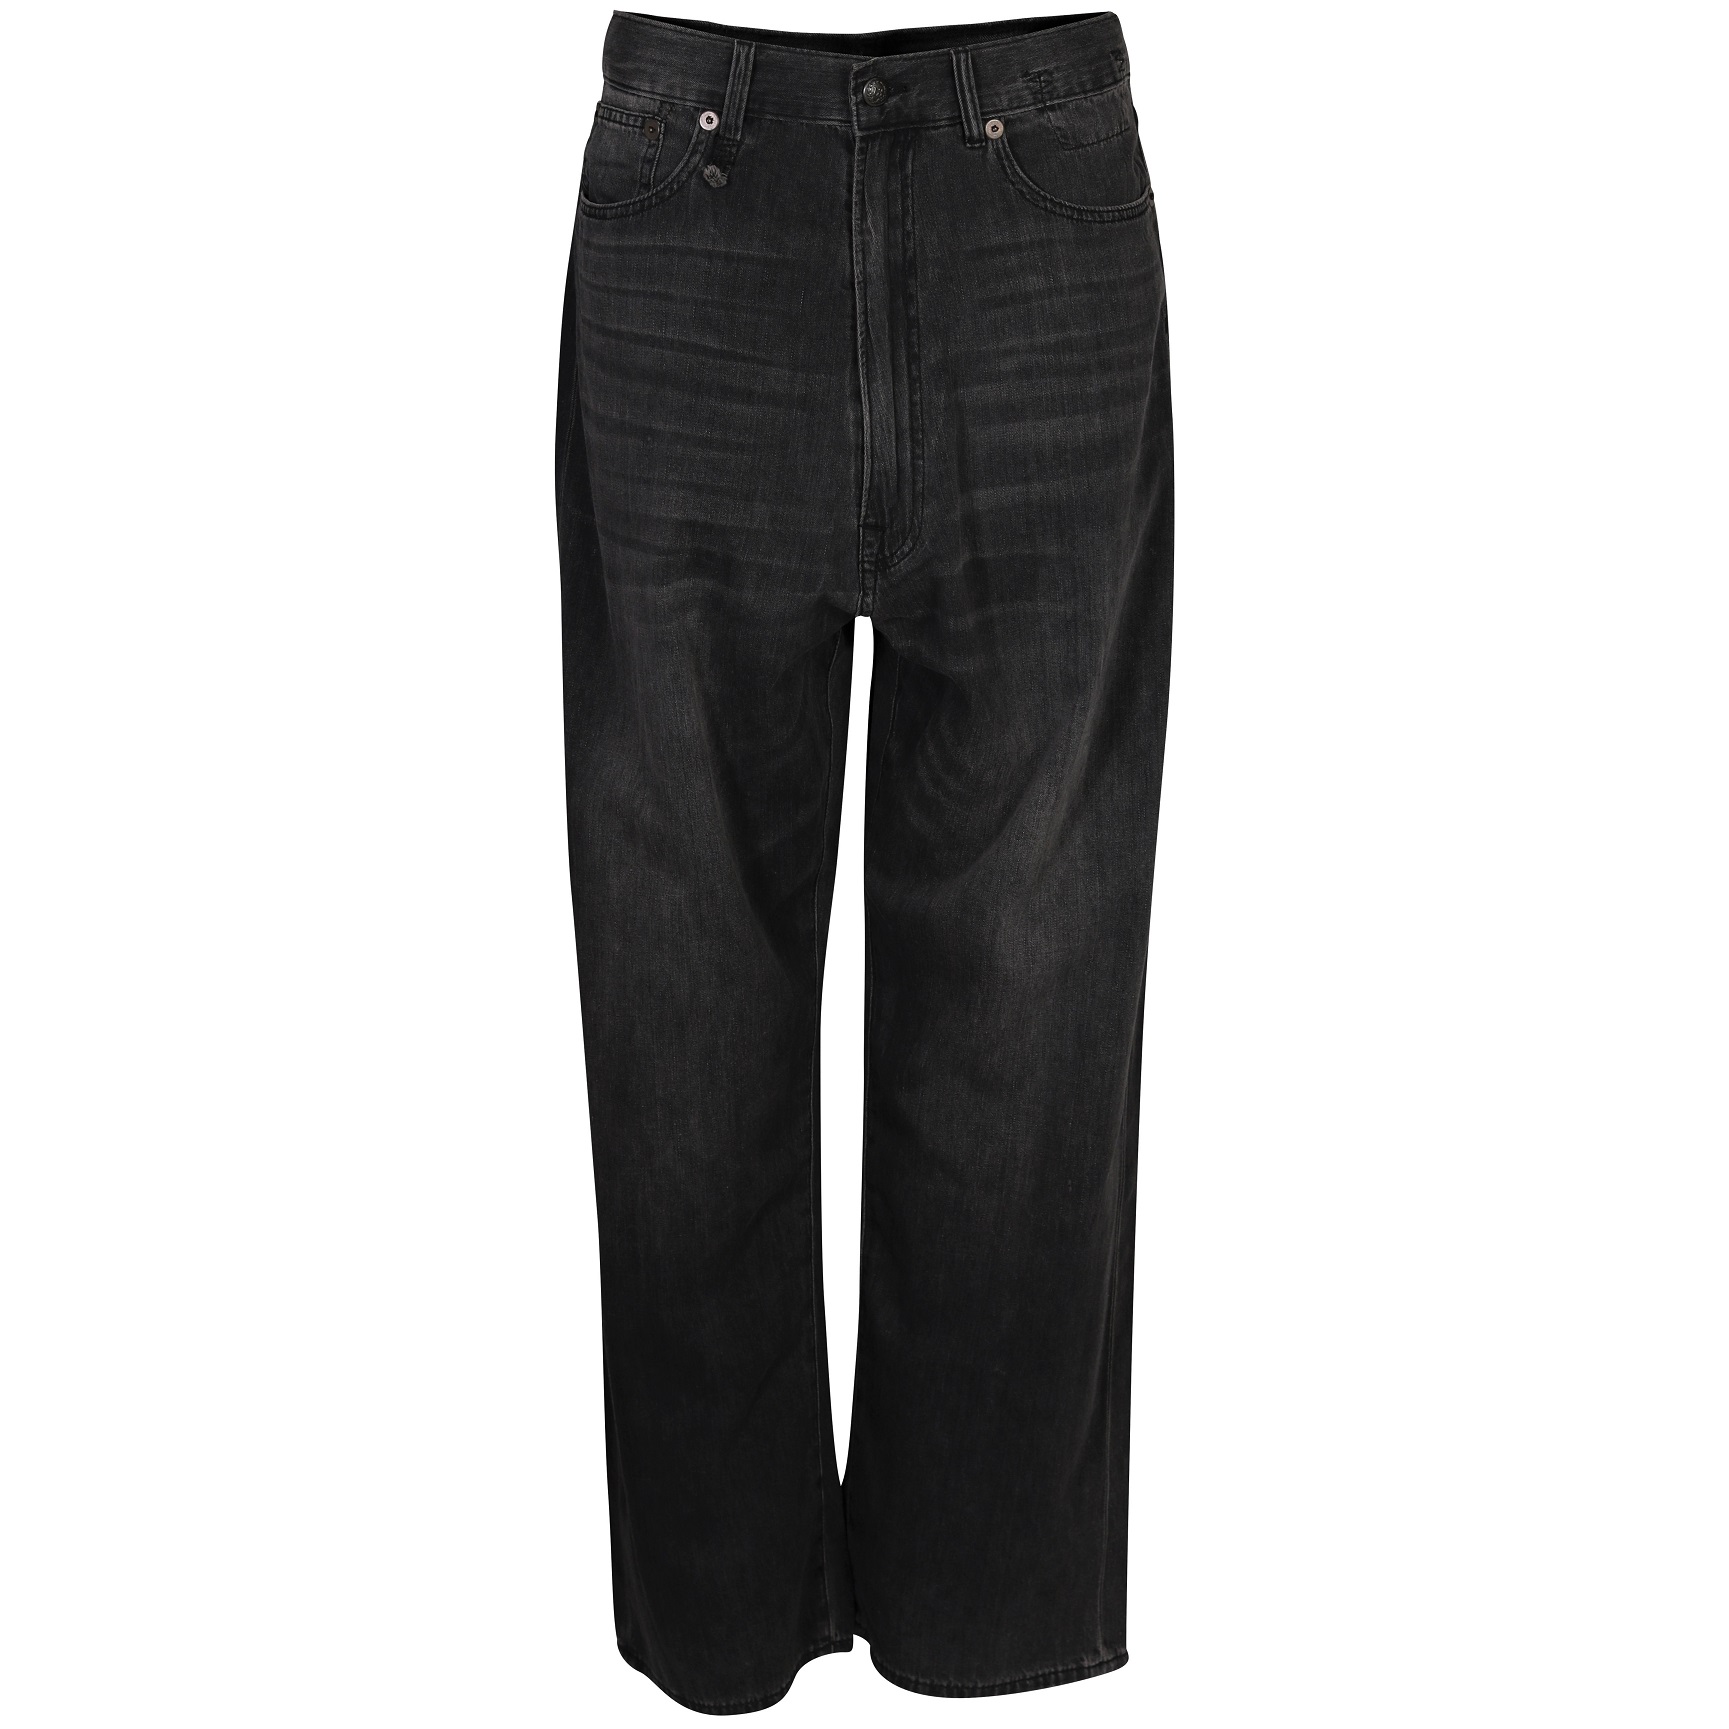 R13 Venti Jeans in Elmore Black 27